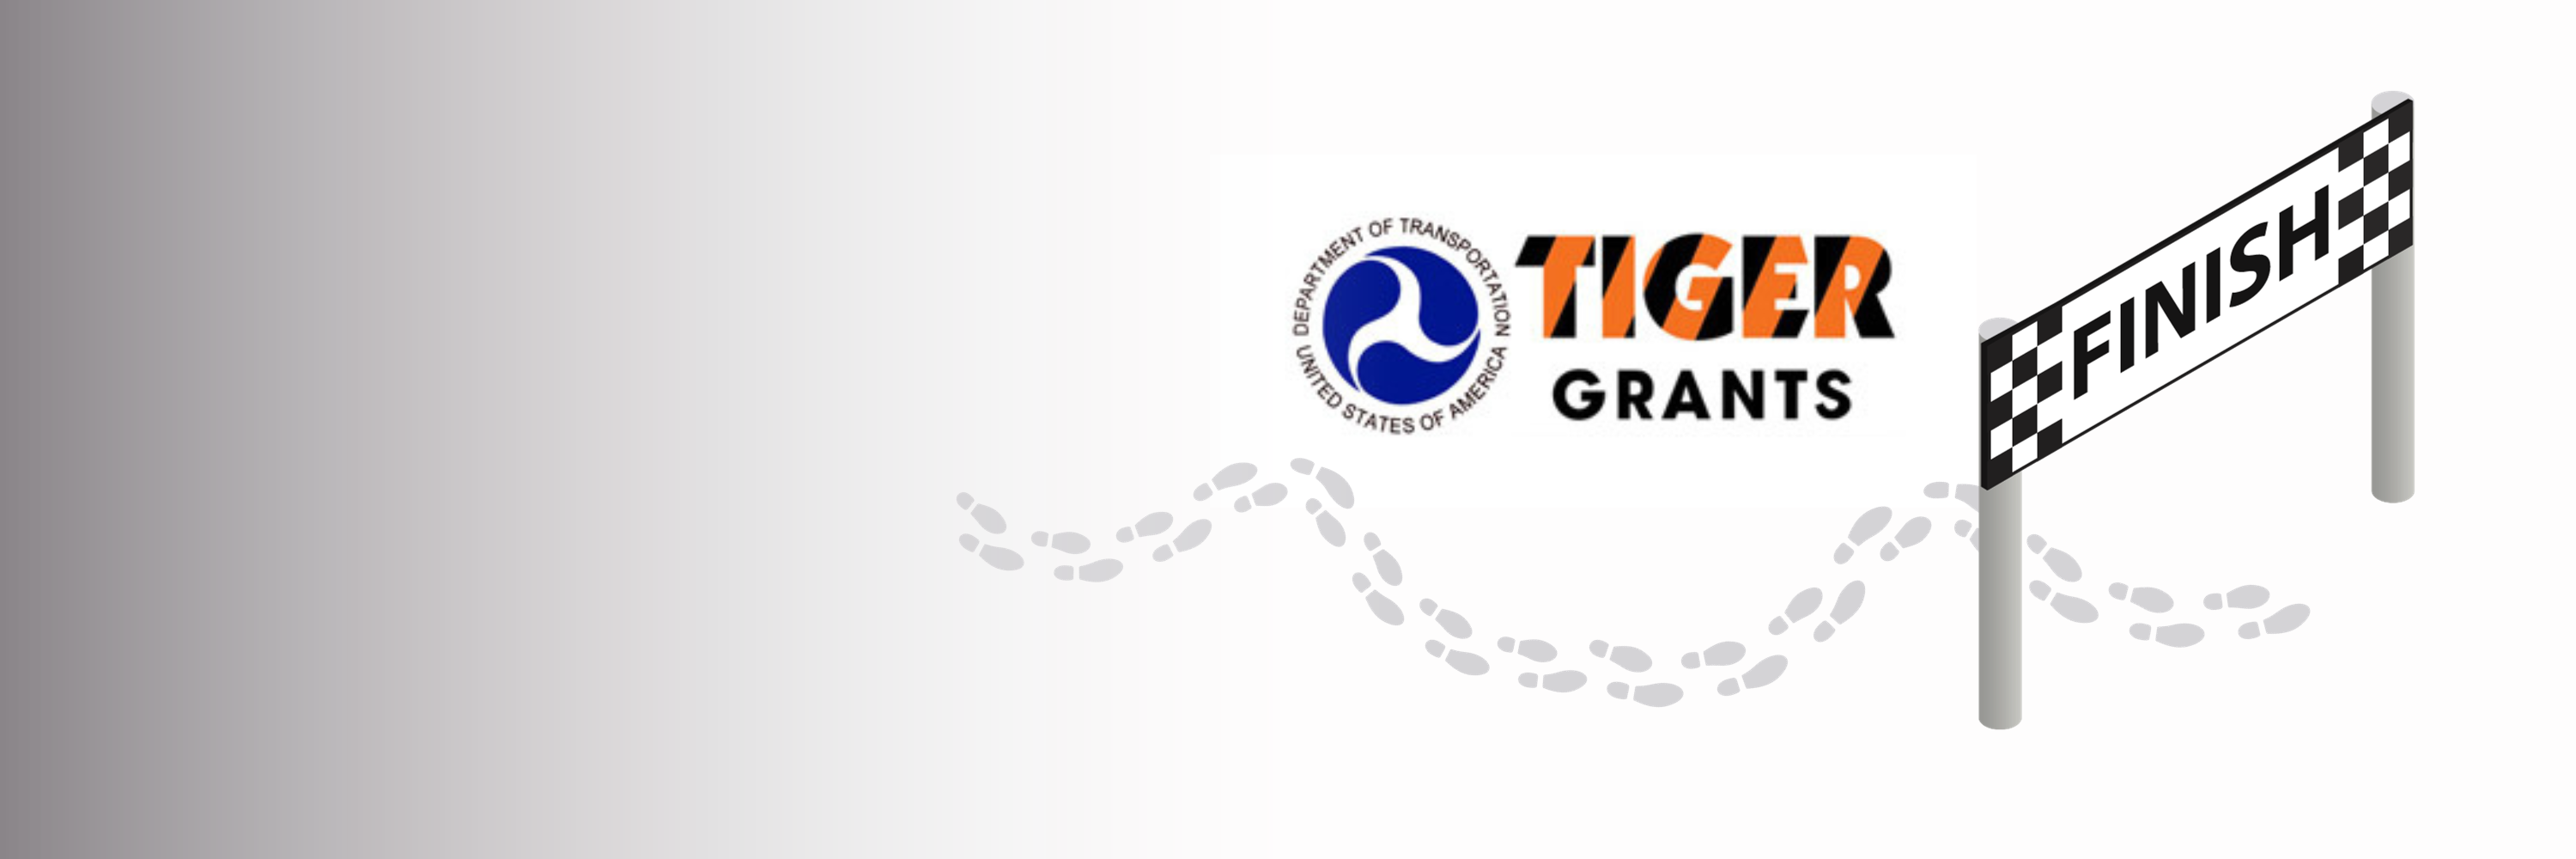 Bridges, Bikes & More: TIGER Grant Concludes